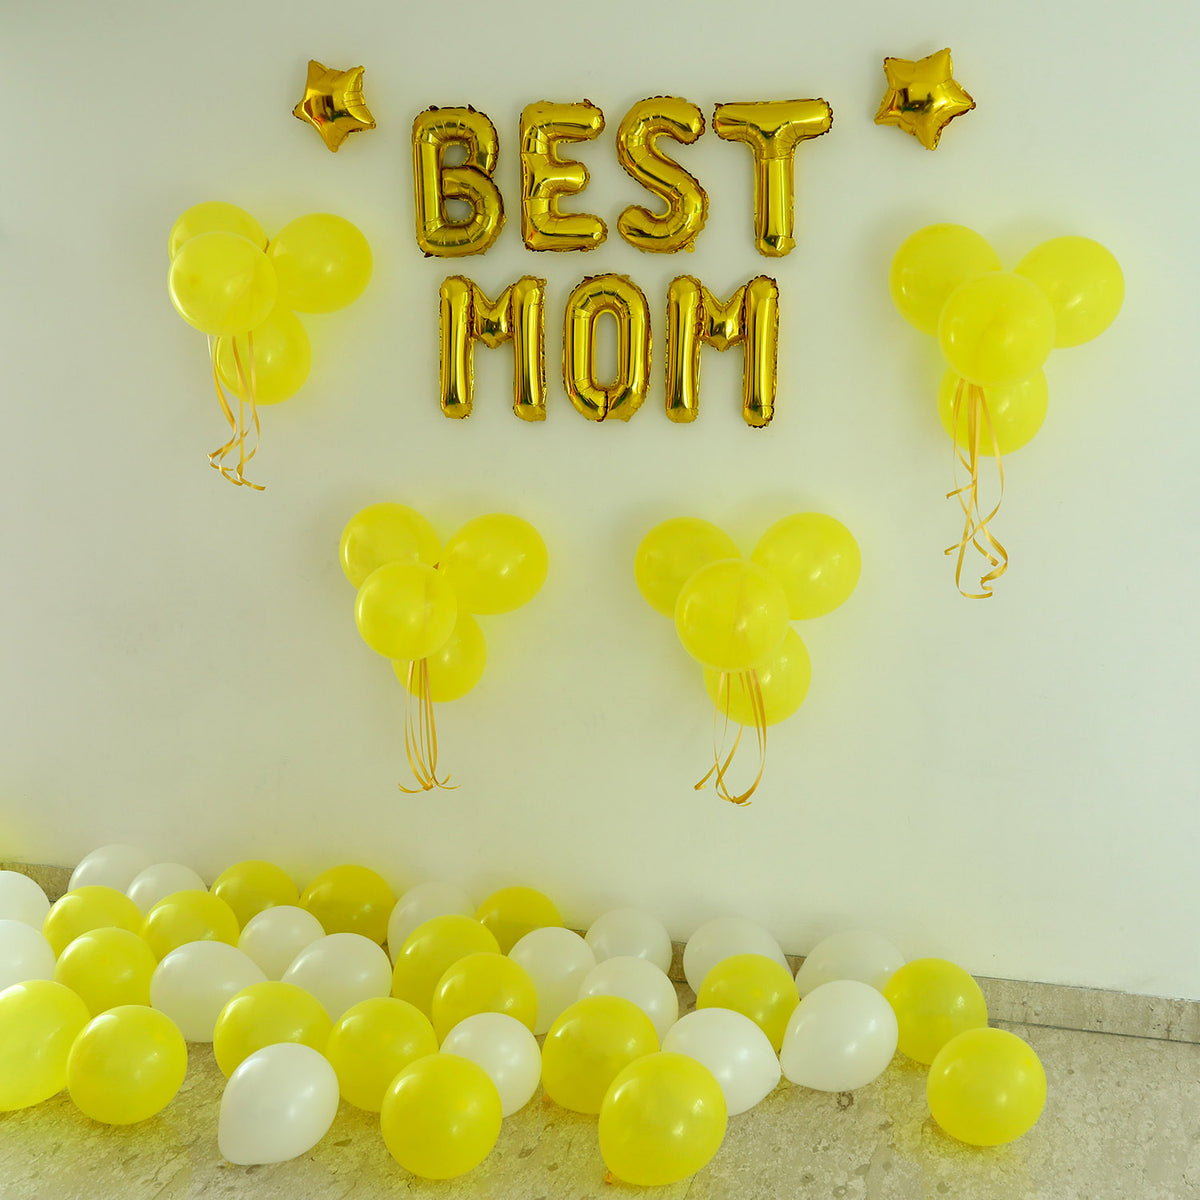 Best Mom Balloon Decor